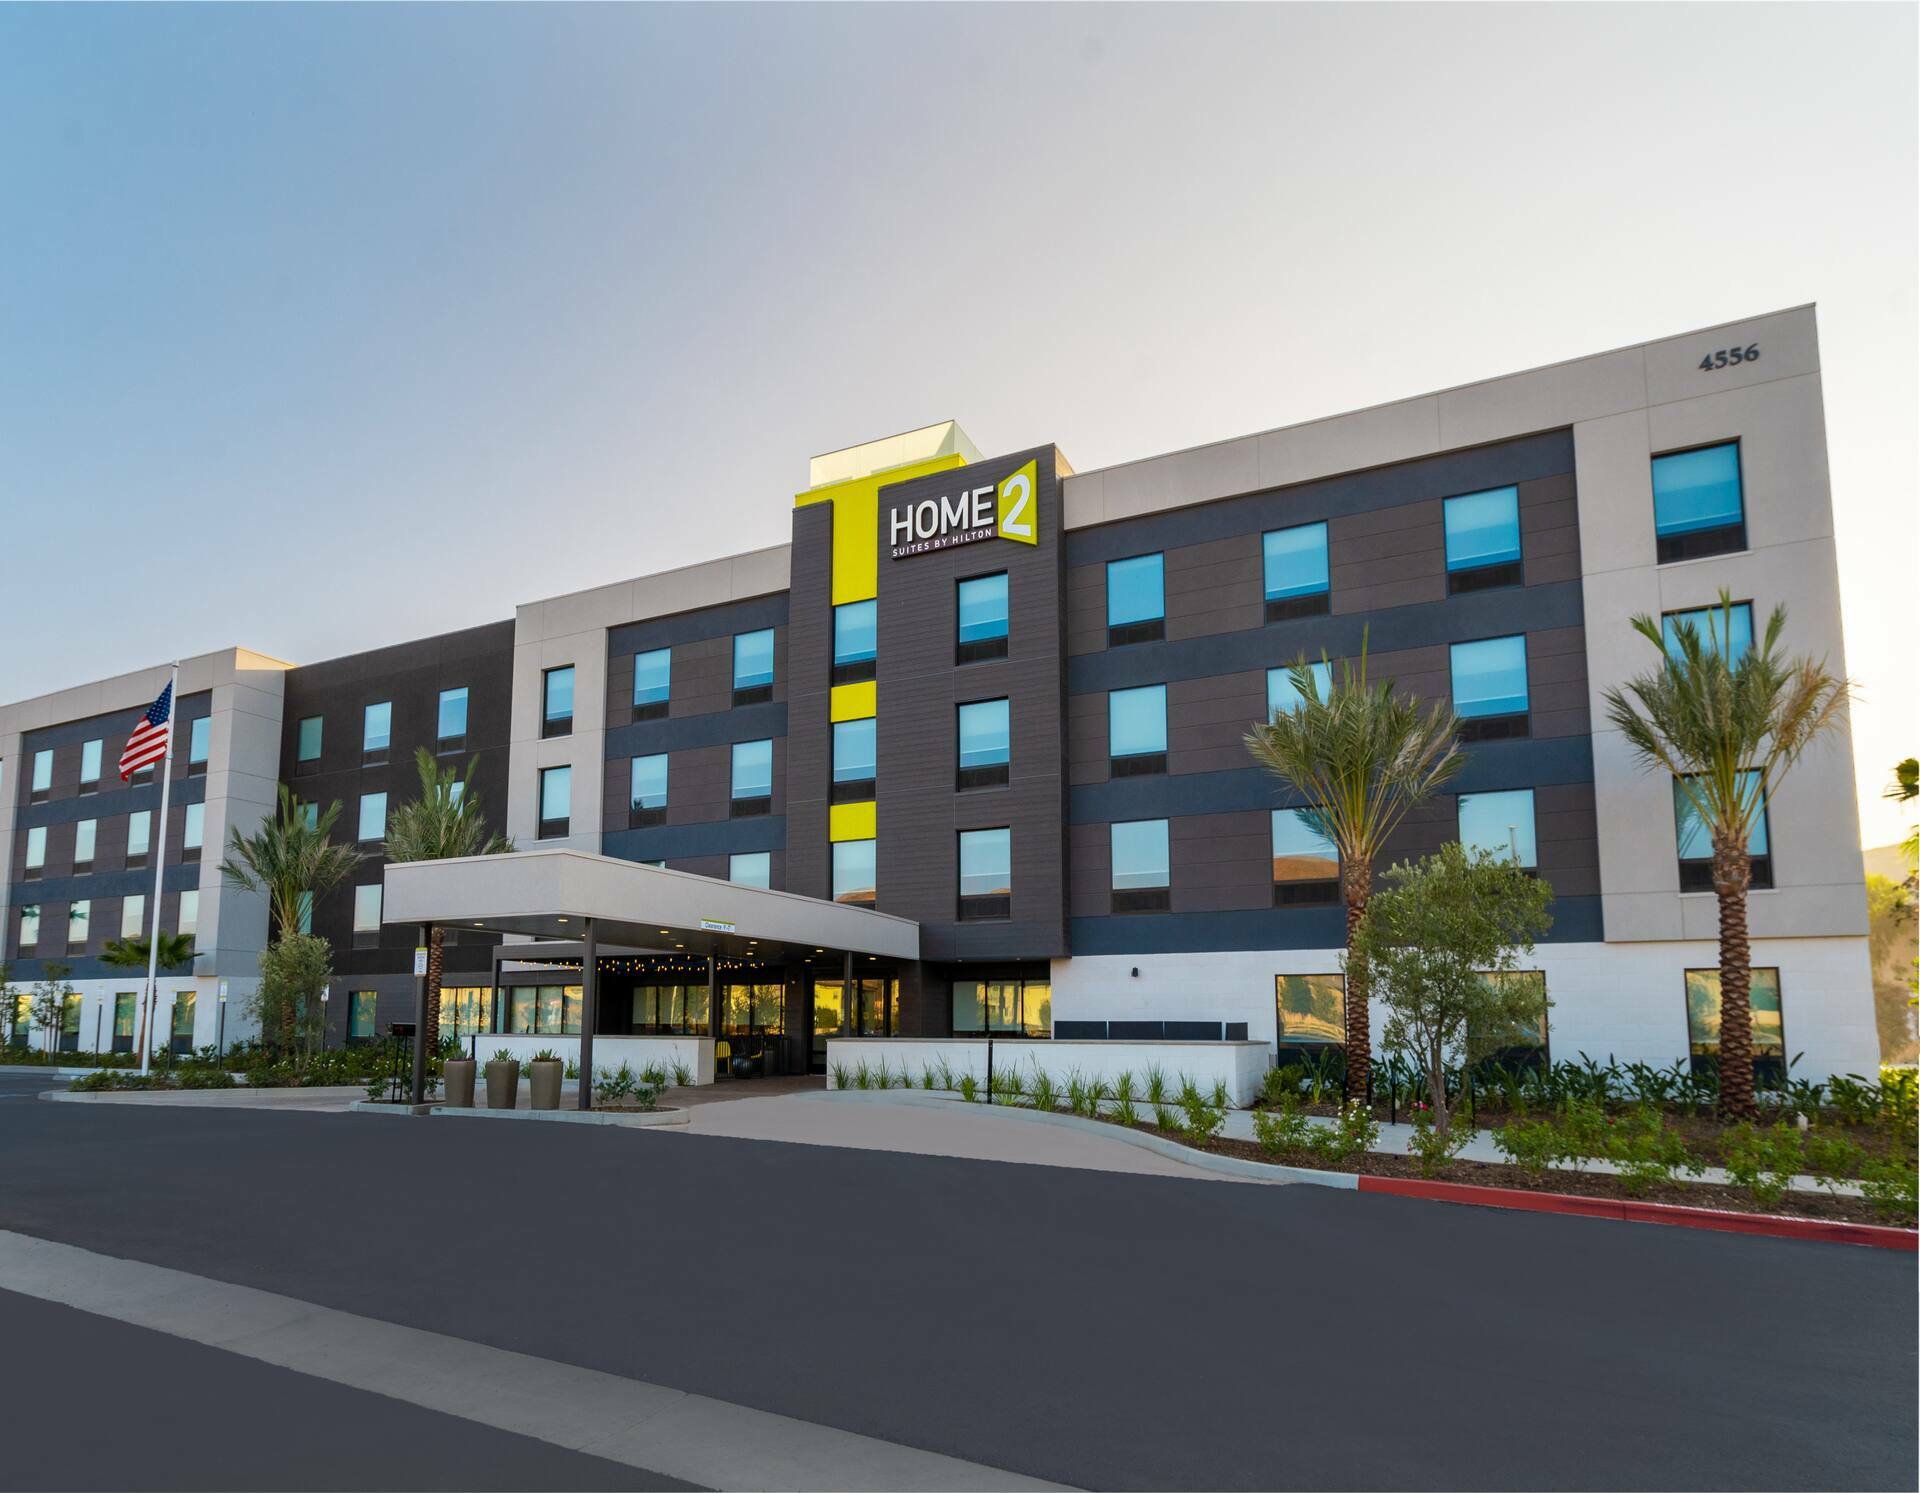 Photo of Home2 Suites by Hilton Corona, Corona, CA